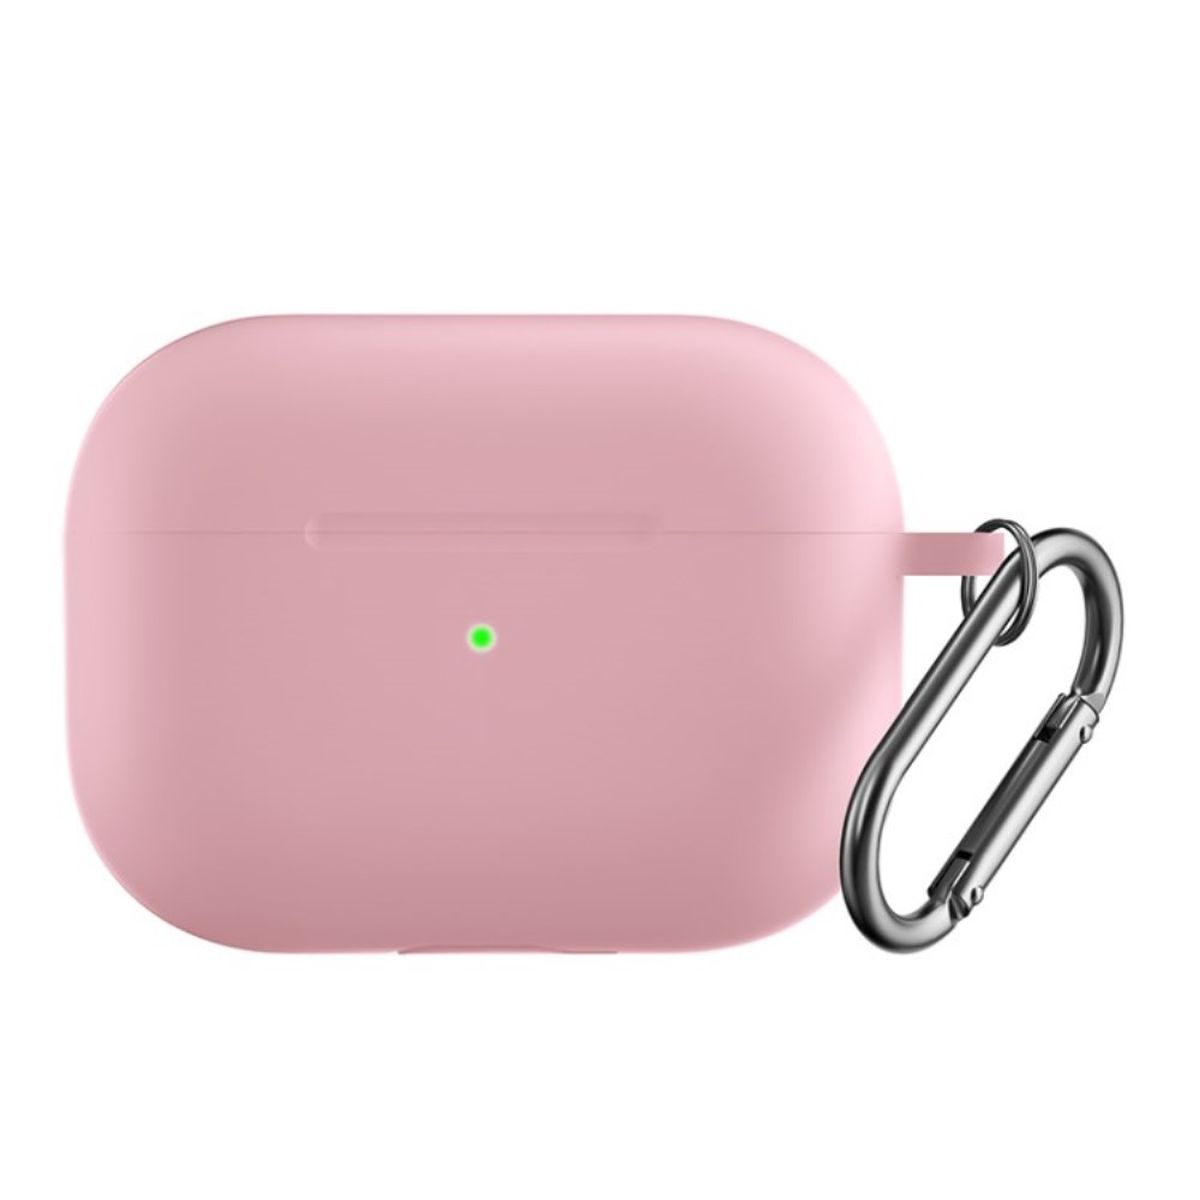 Hülle für Apple AirPods Pro 2 Silikon Case Cover Etui Bumper Schutzhülle Rosa